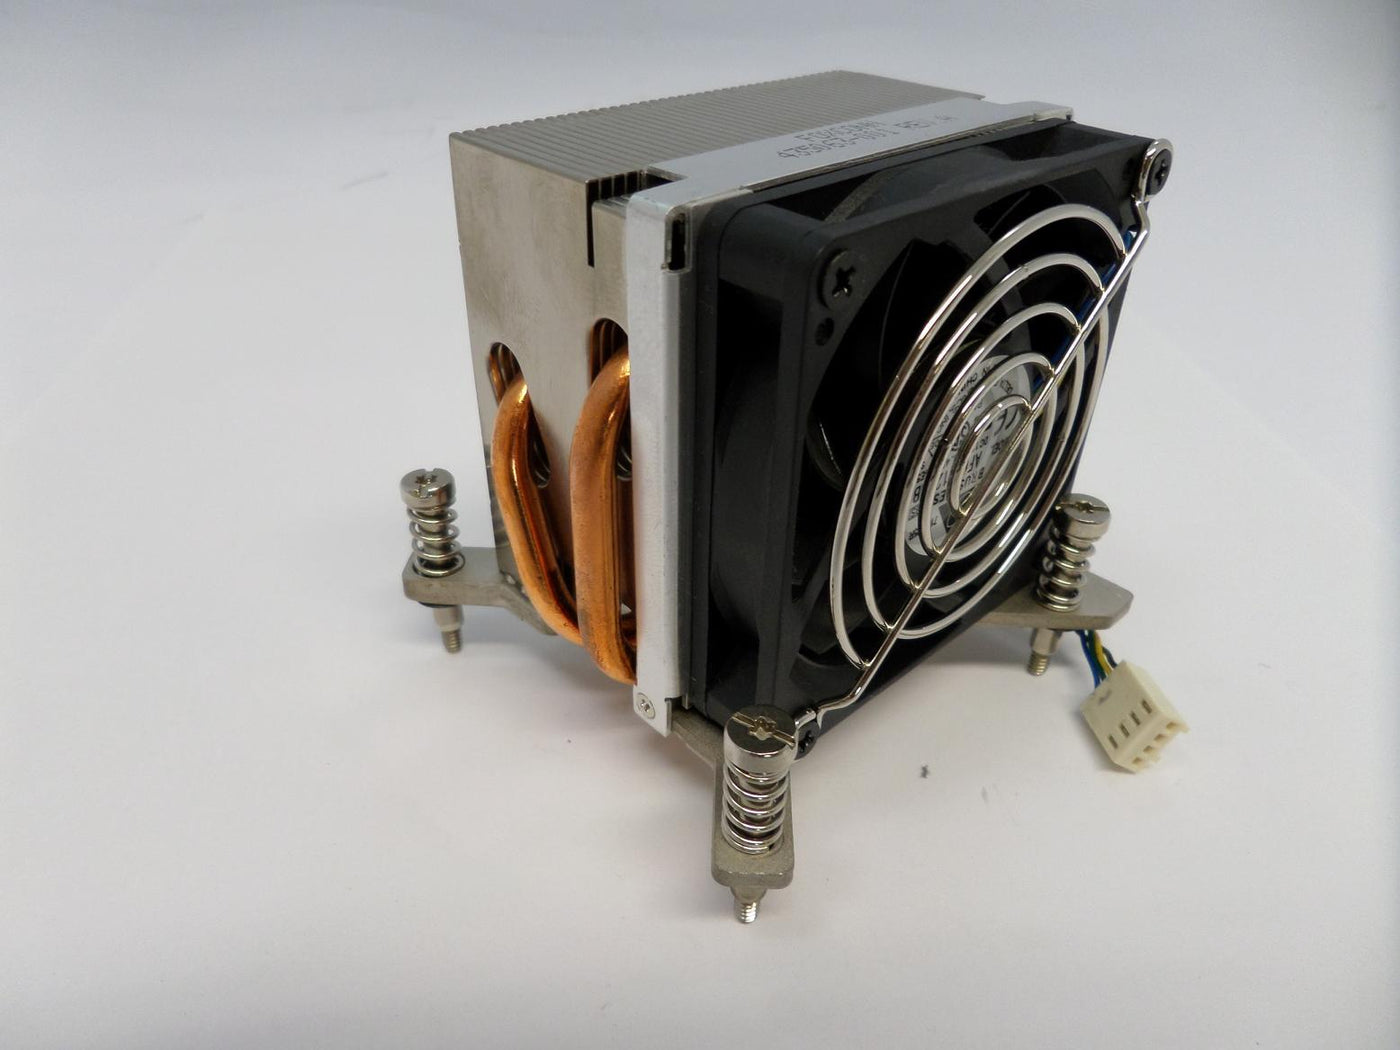 435063-001 - HP dc7700 SFF Heatsink and Fan Assembly - USED